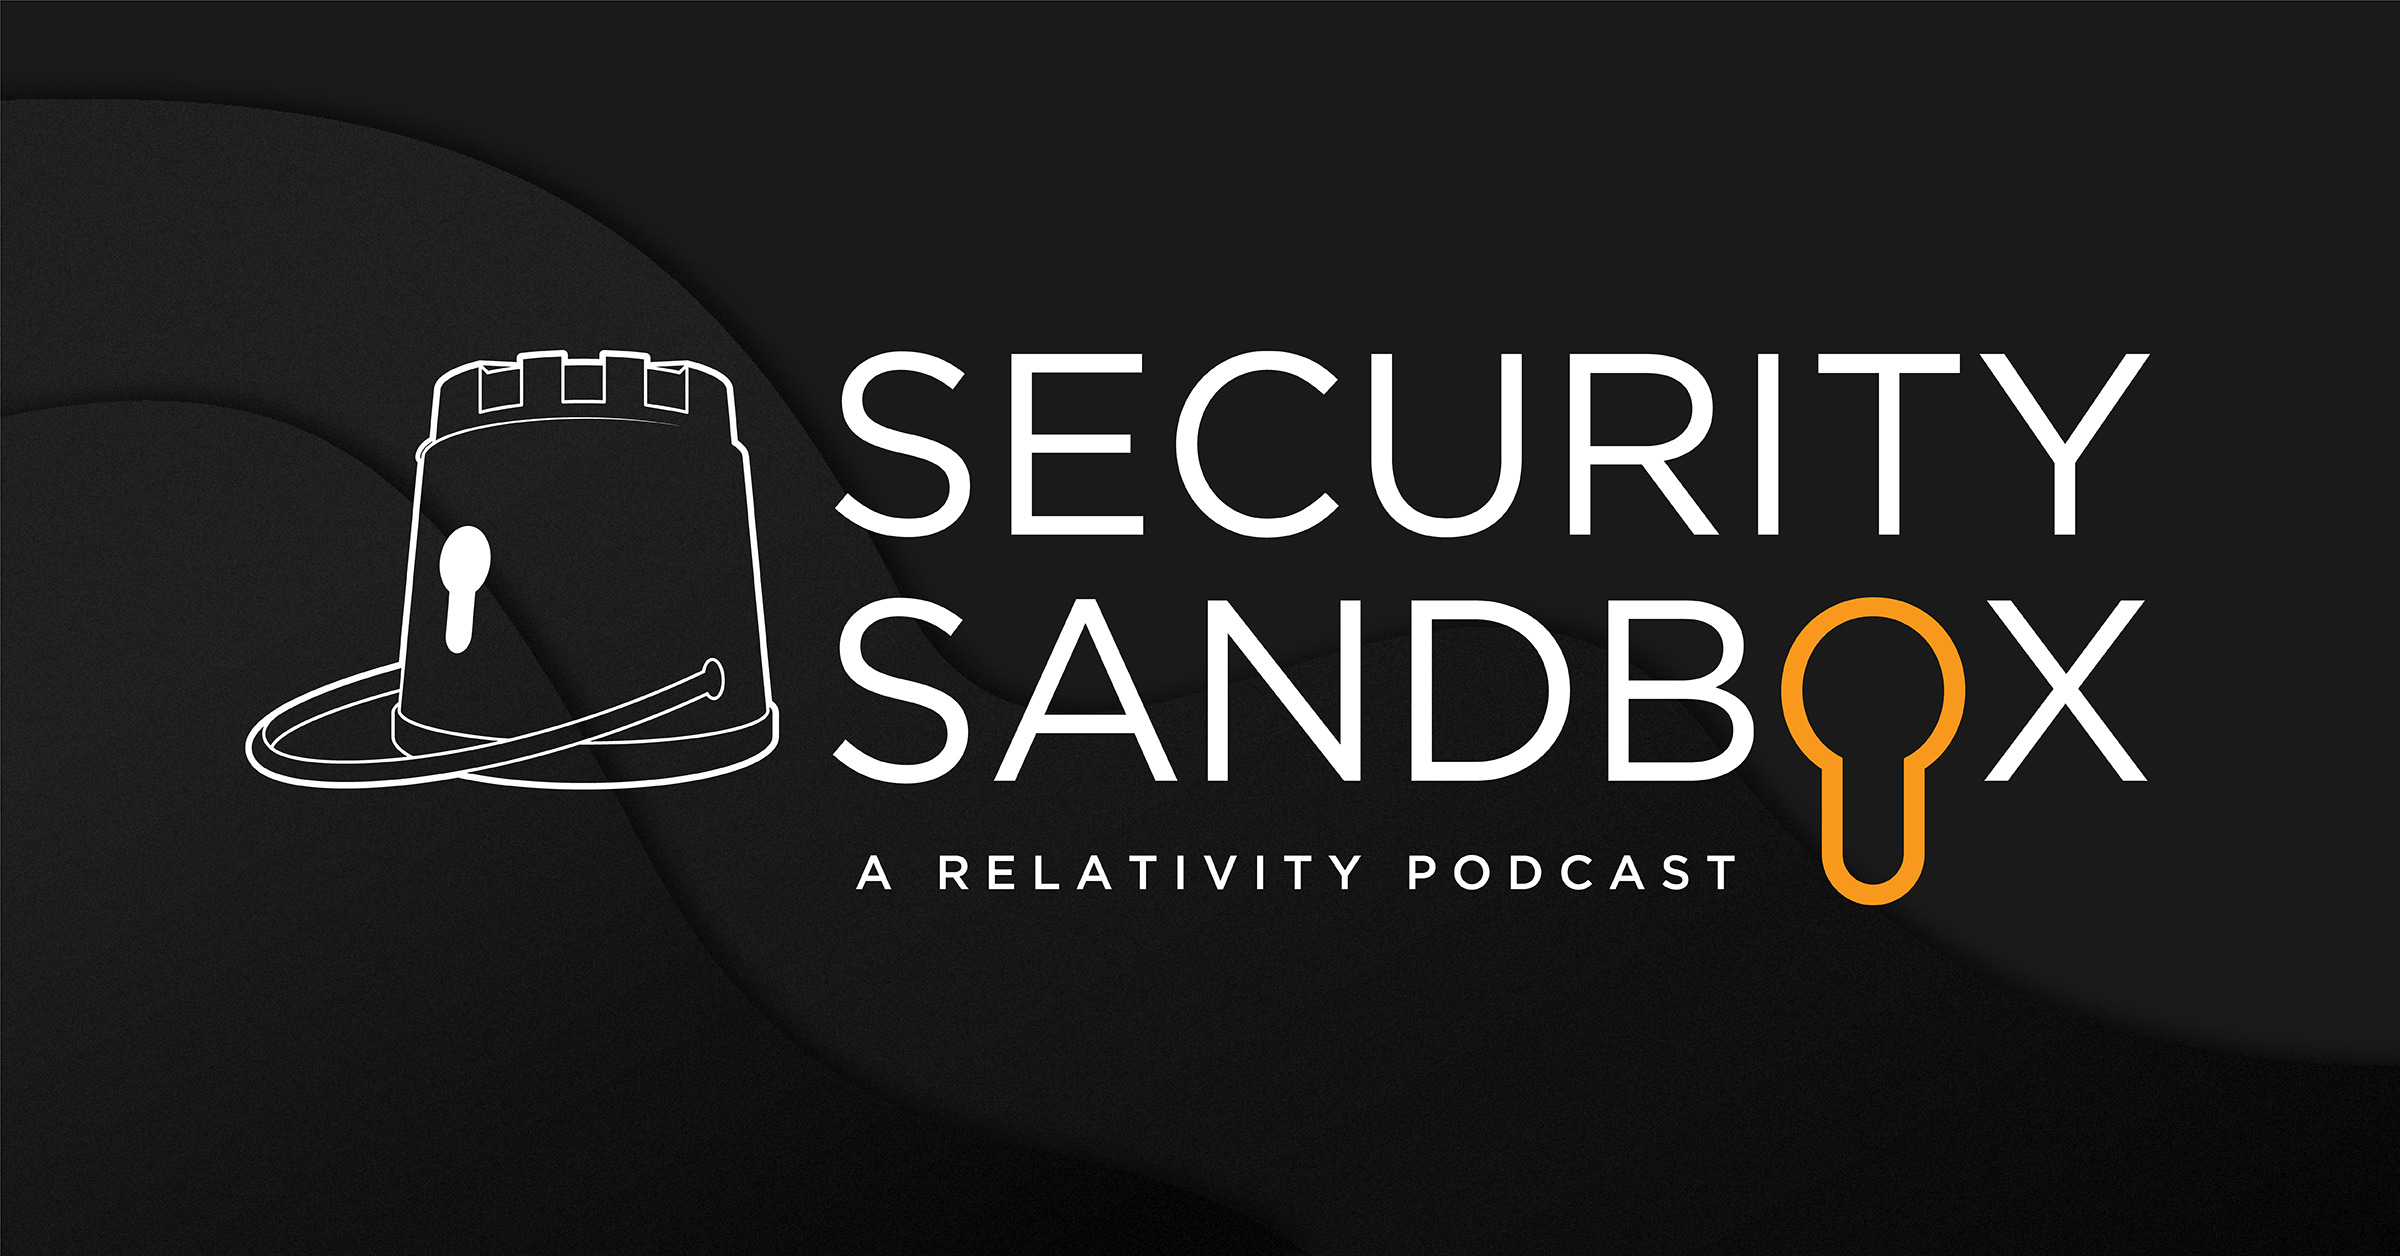 Security Sandbox 5.18.21